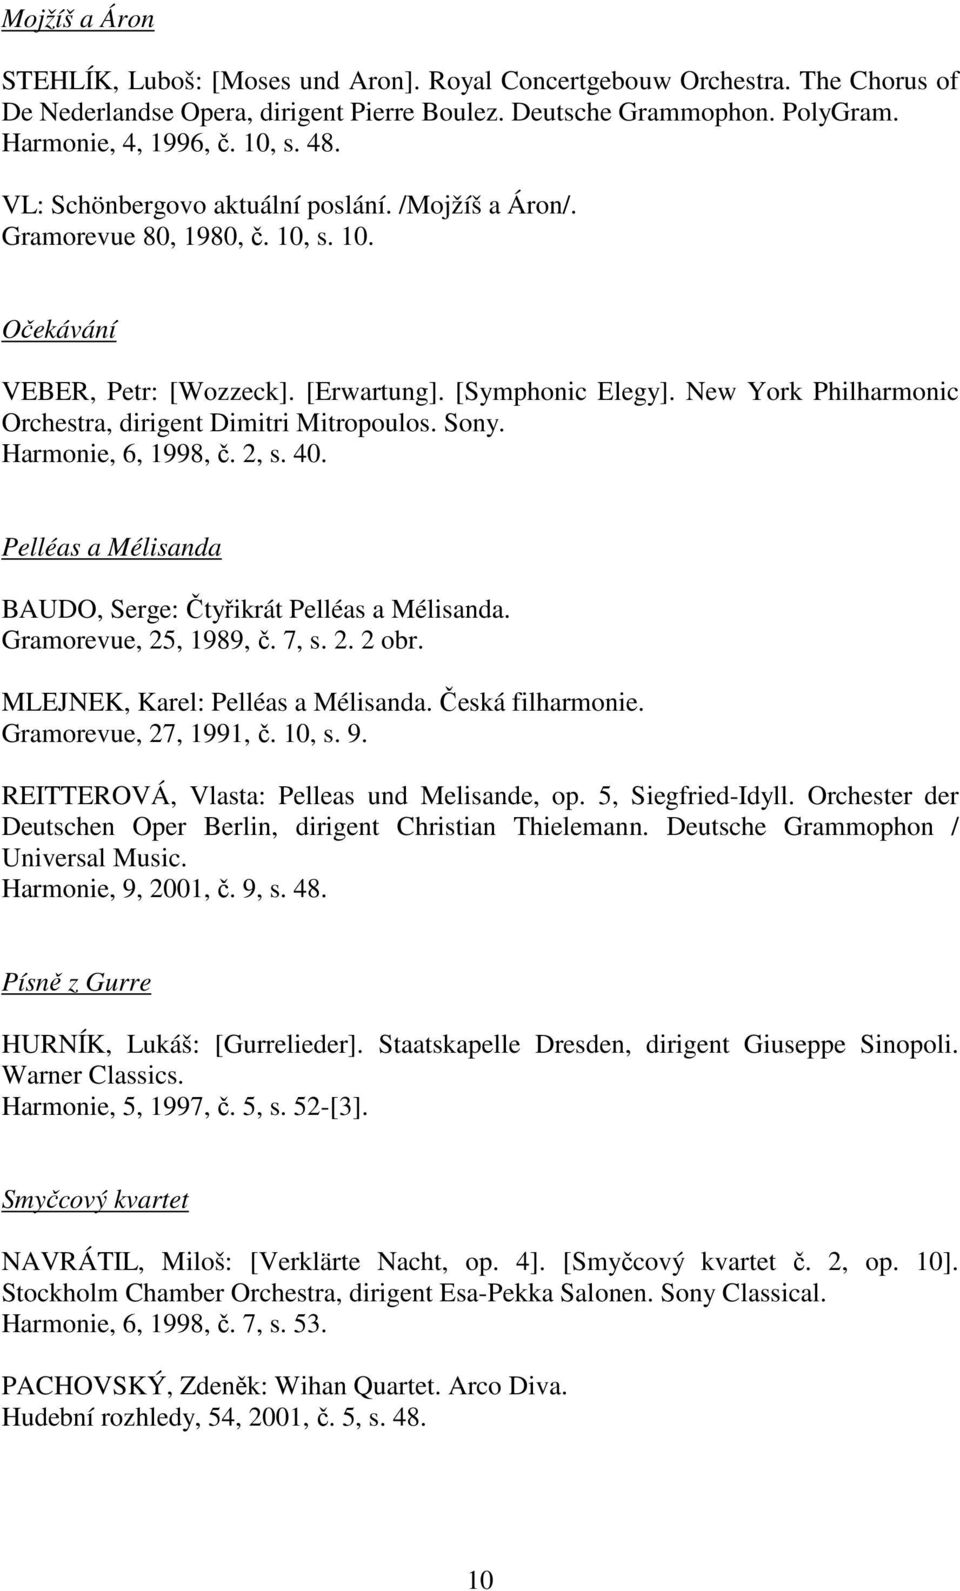 New York Philharmonic Orchestra, dirigent Dimitri Mitropoulos. Sony. Harmonie, 6, 1998, č. 2, s. 40. Pelléas a Mélisanda BAUDO, Serge: Čtyřikrát Pelléas a Mélisanda. Gramorevue, 25, 1989, č. 7, s. 2. 2 obr.